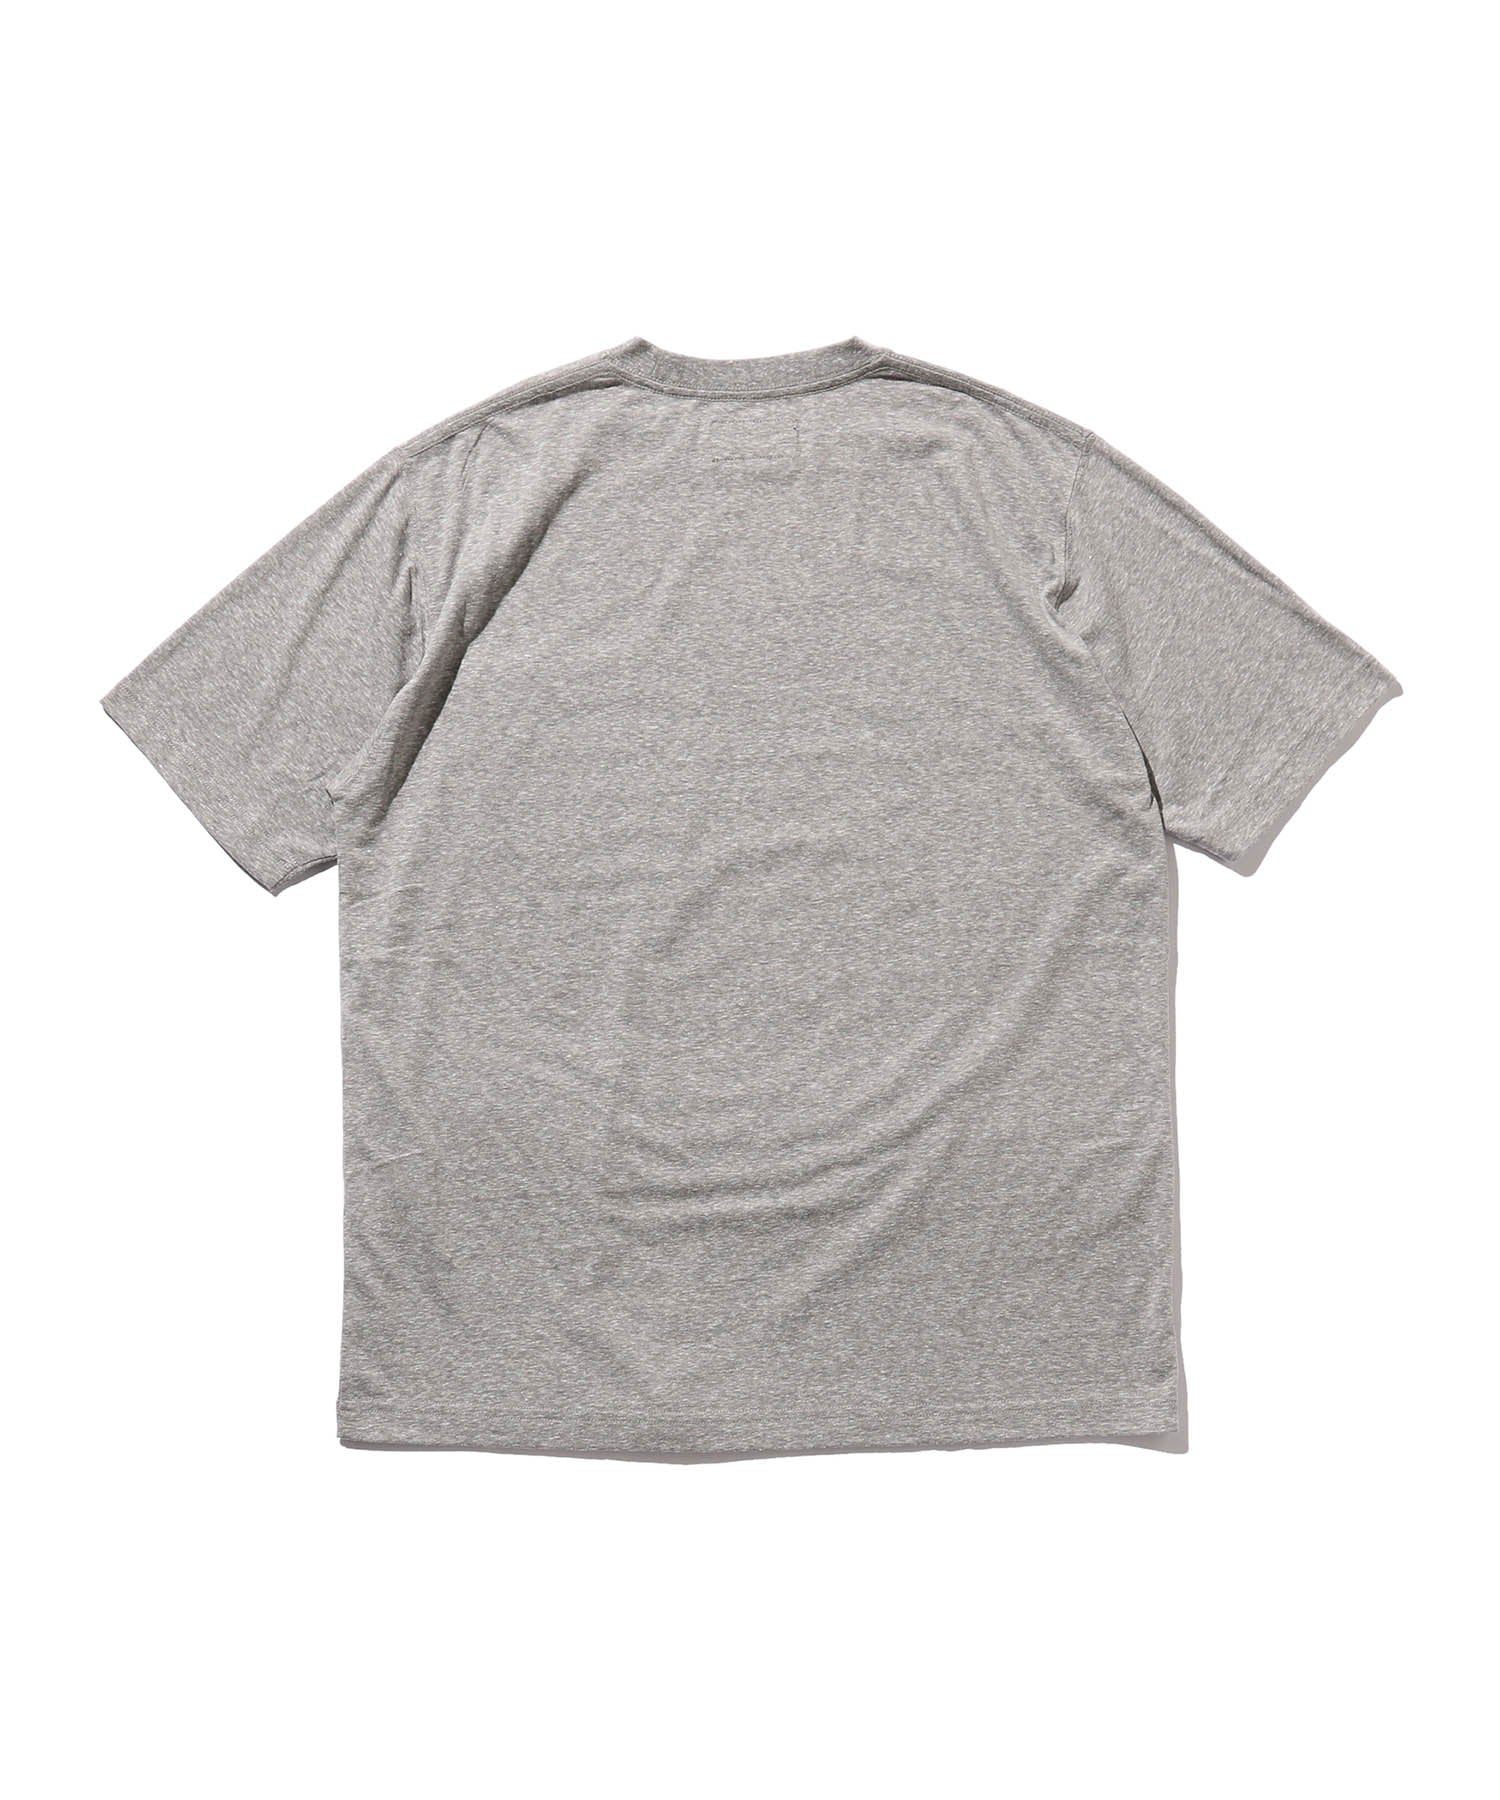 Pocket T-Shirt in Grey